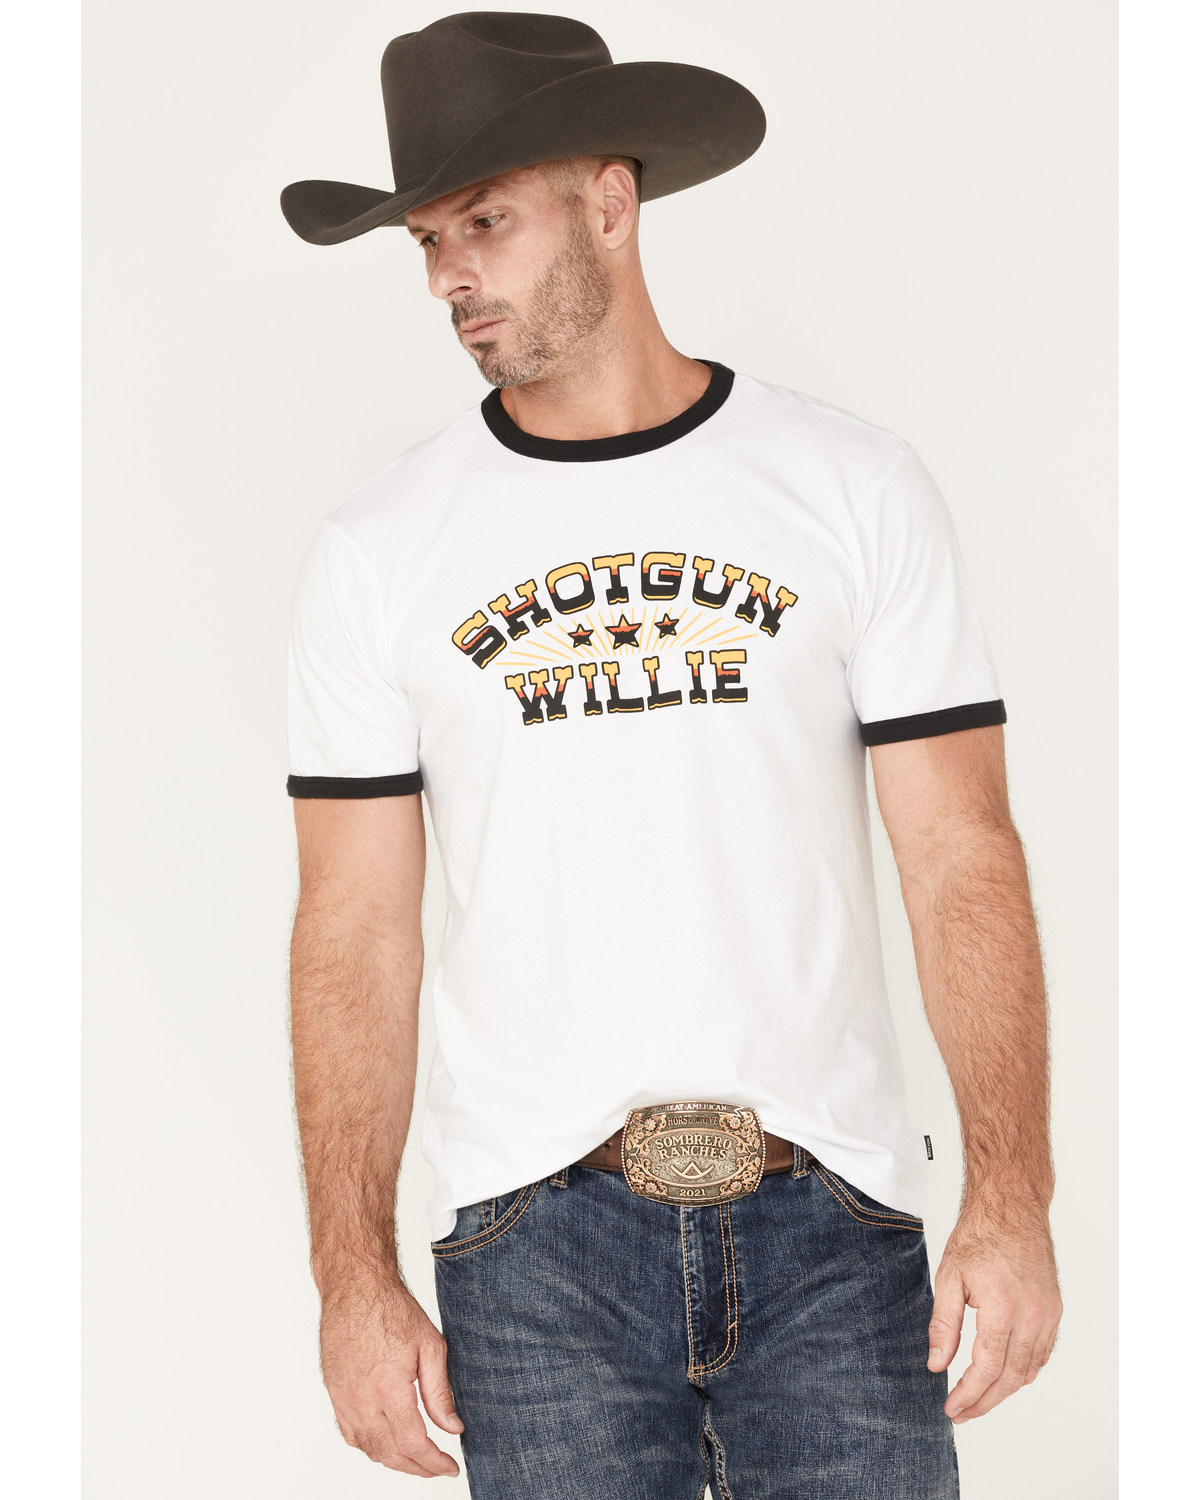 Brixton x Willie Nelson Men's Shotgun Graphic Ringer T-Shirt